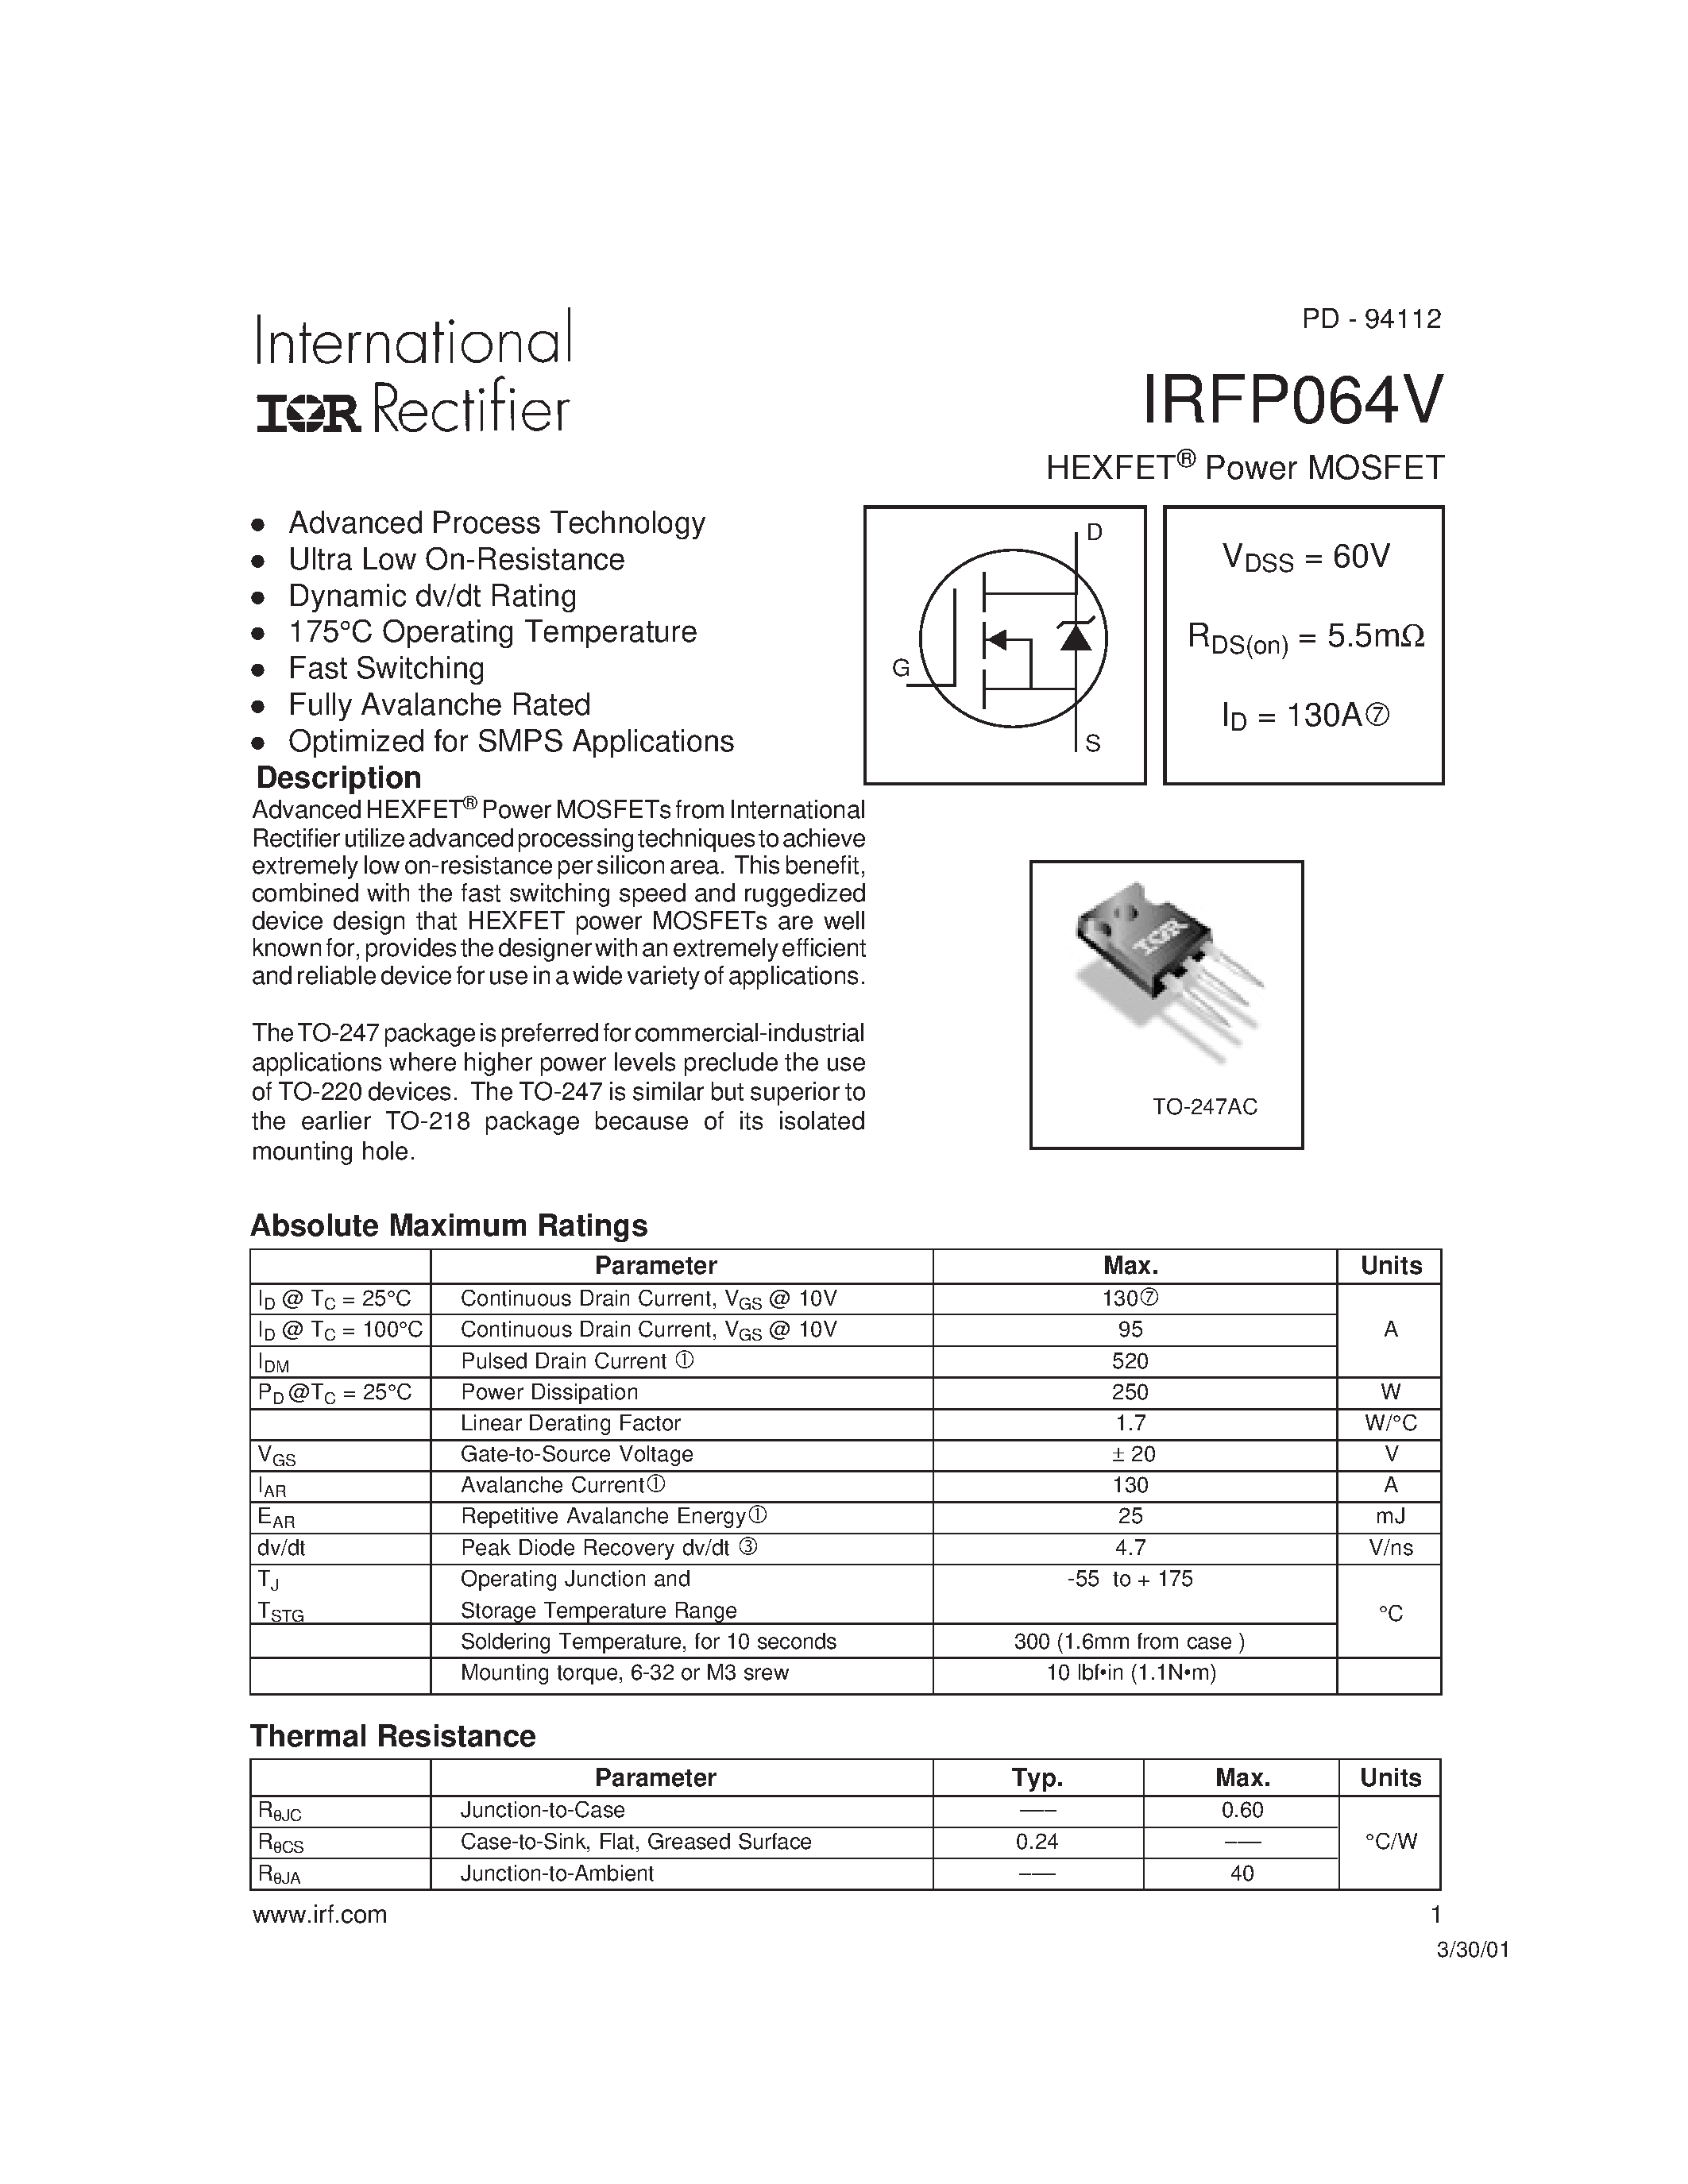 Даташит IRFP064V - Power MOSFET страница 1